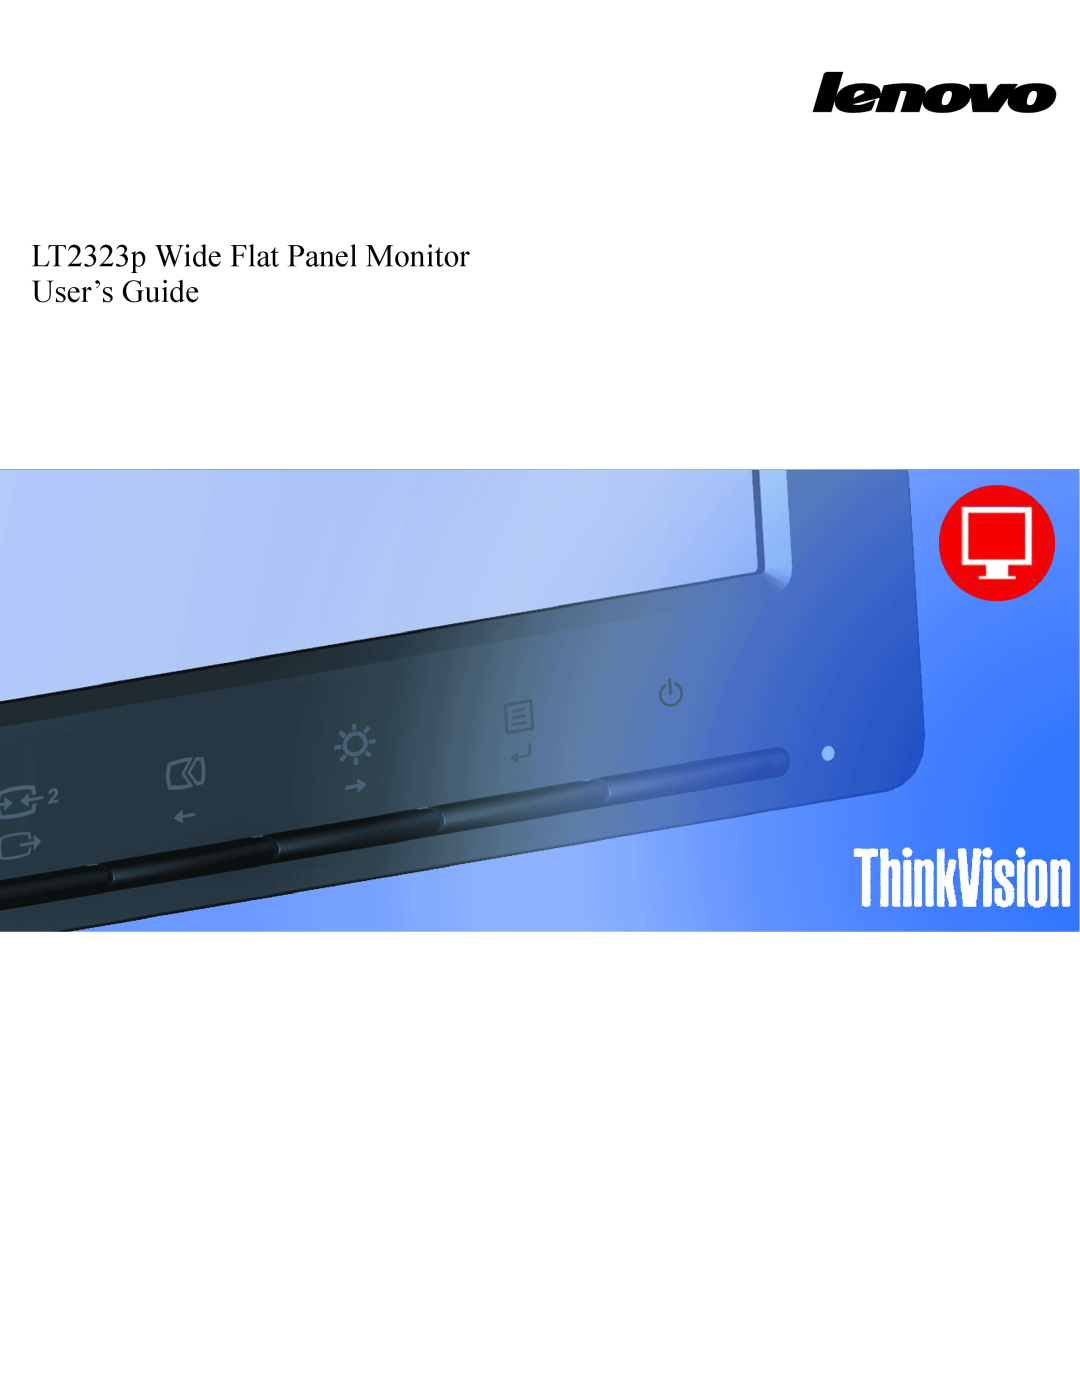 Lenovo LT2323P manual LT2323p Wide Flat Panel Monitor User’s Guide 